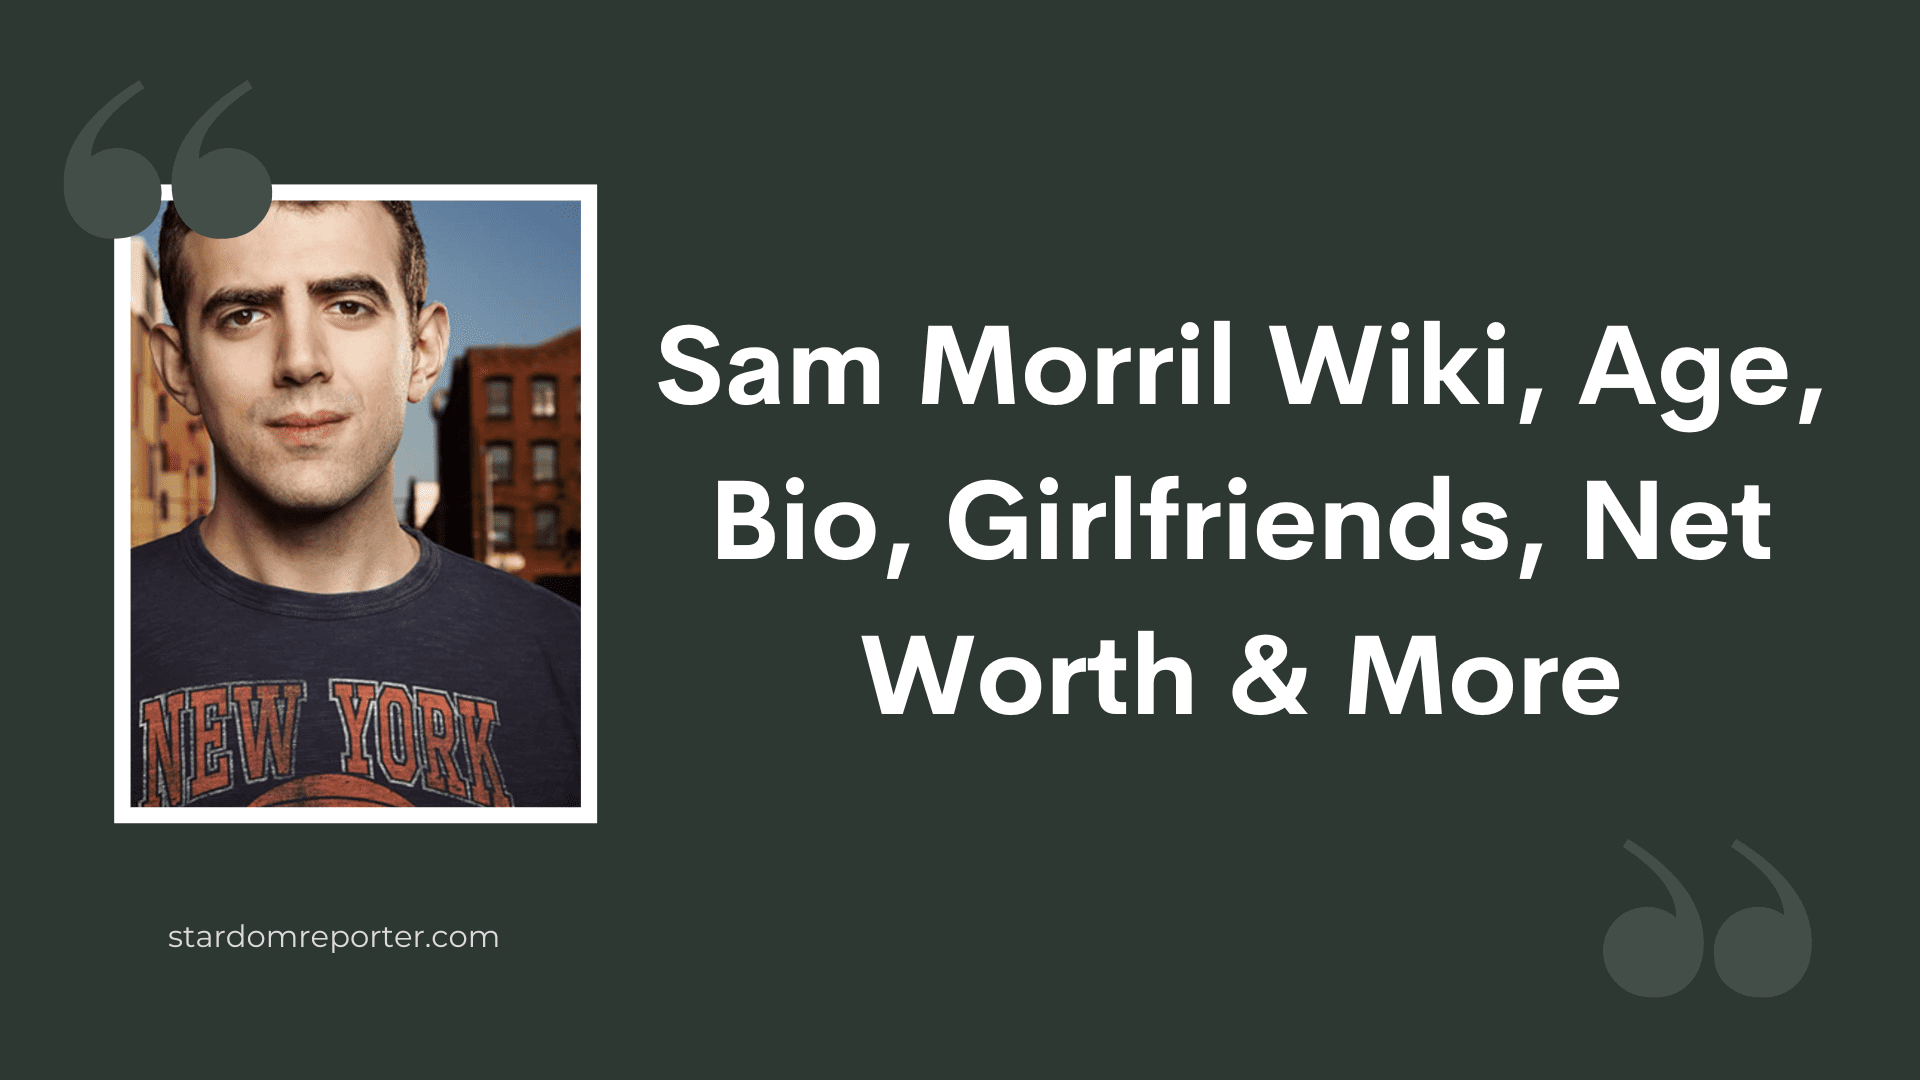 Sam Morril Wiki, Age, Bio, Girlfriends, Net Worth & More - 25